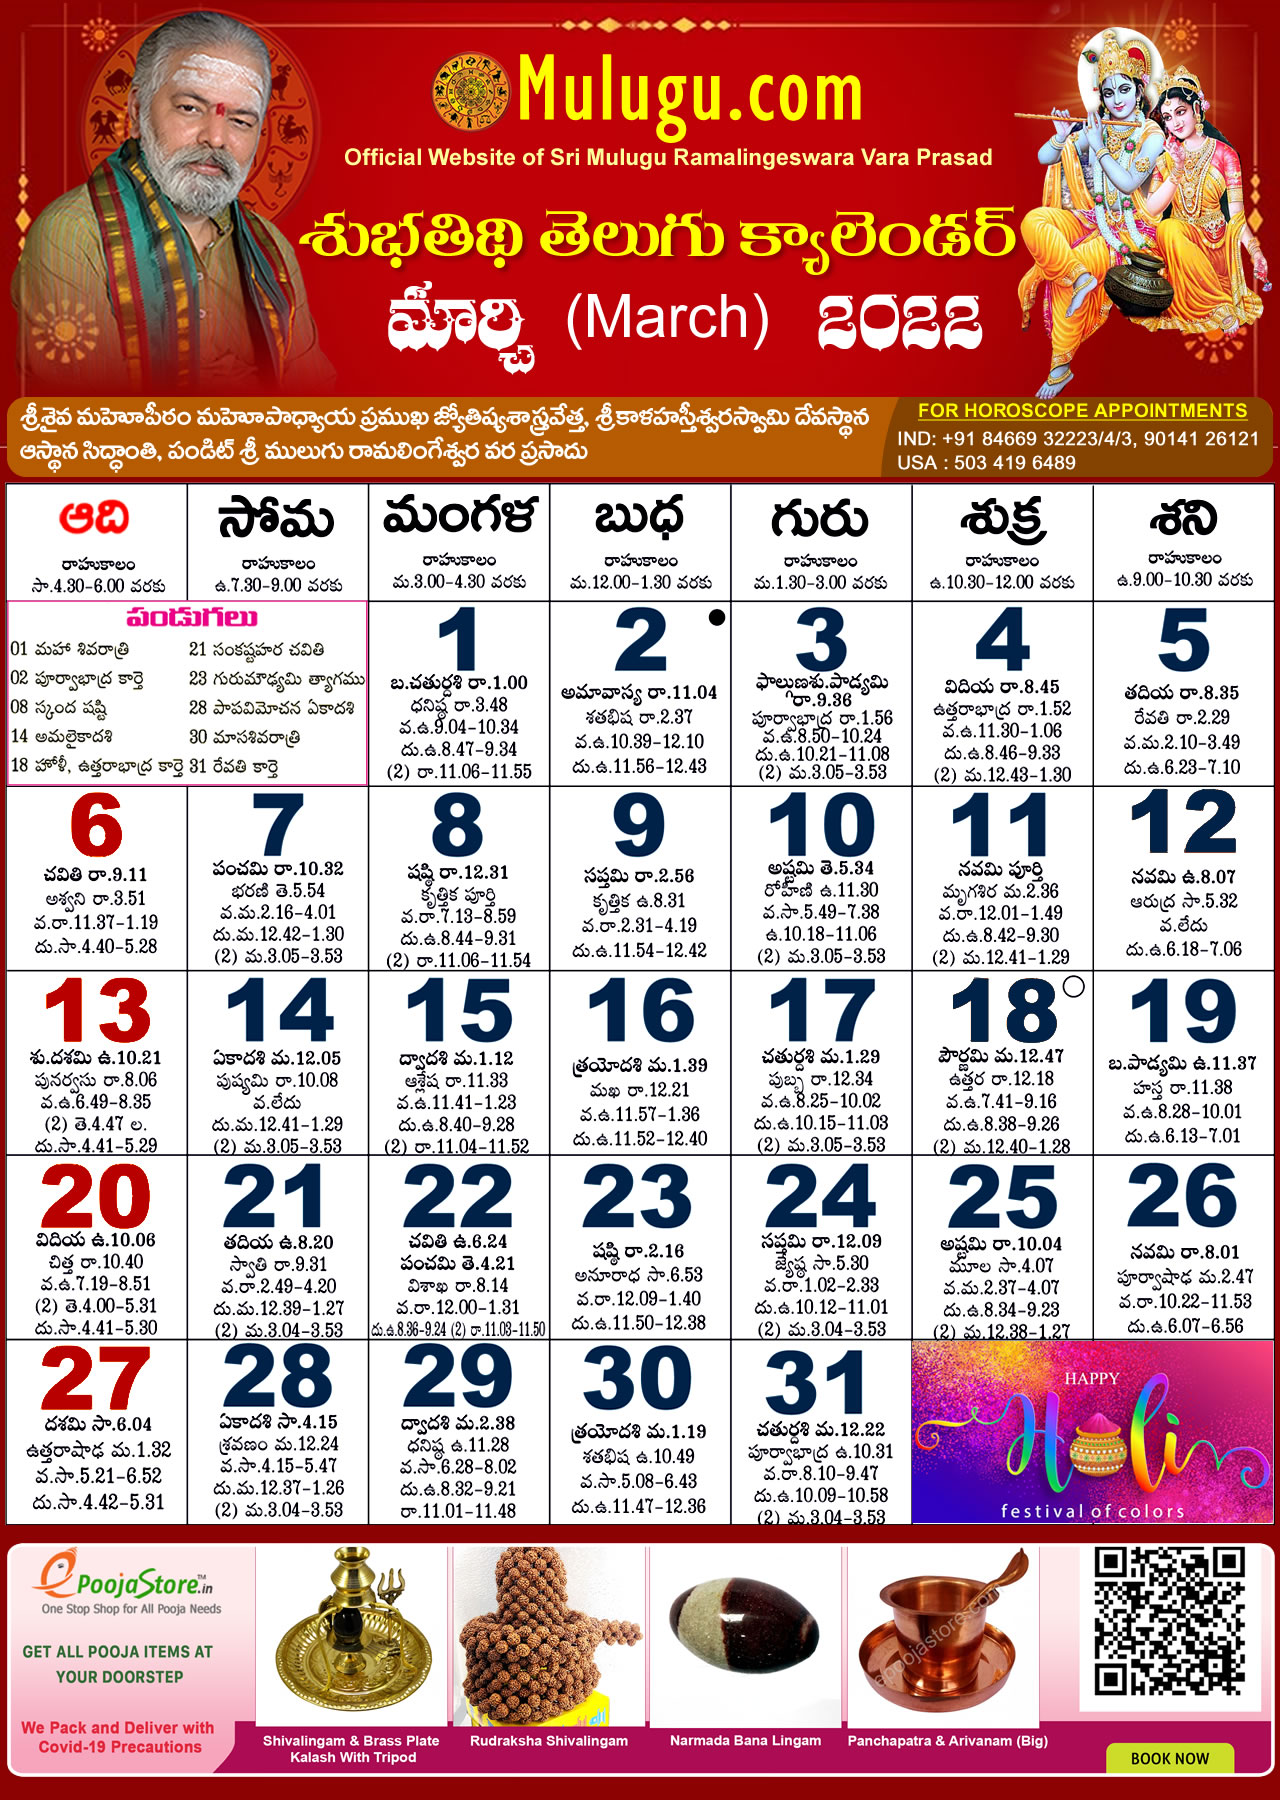 Telugu Calendar 2022 California Subhathidi March Telugu Calendar 2022 | Telugu Calendar 2022 - 2023 | Telugu  Subhathidi Calendar 2022 | Calendar 2022 | Telugu Calendar 2022 |  Subhathidi Calendar 2022 | Chicago Calendar 2022 |